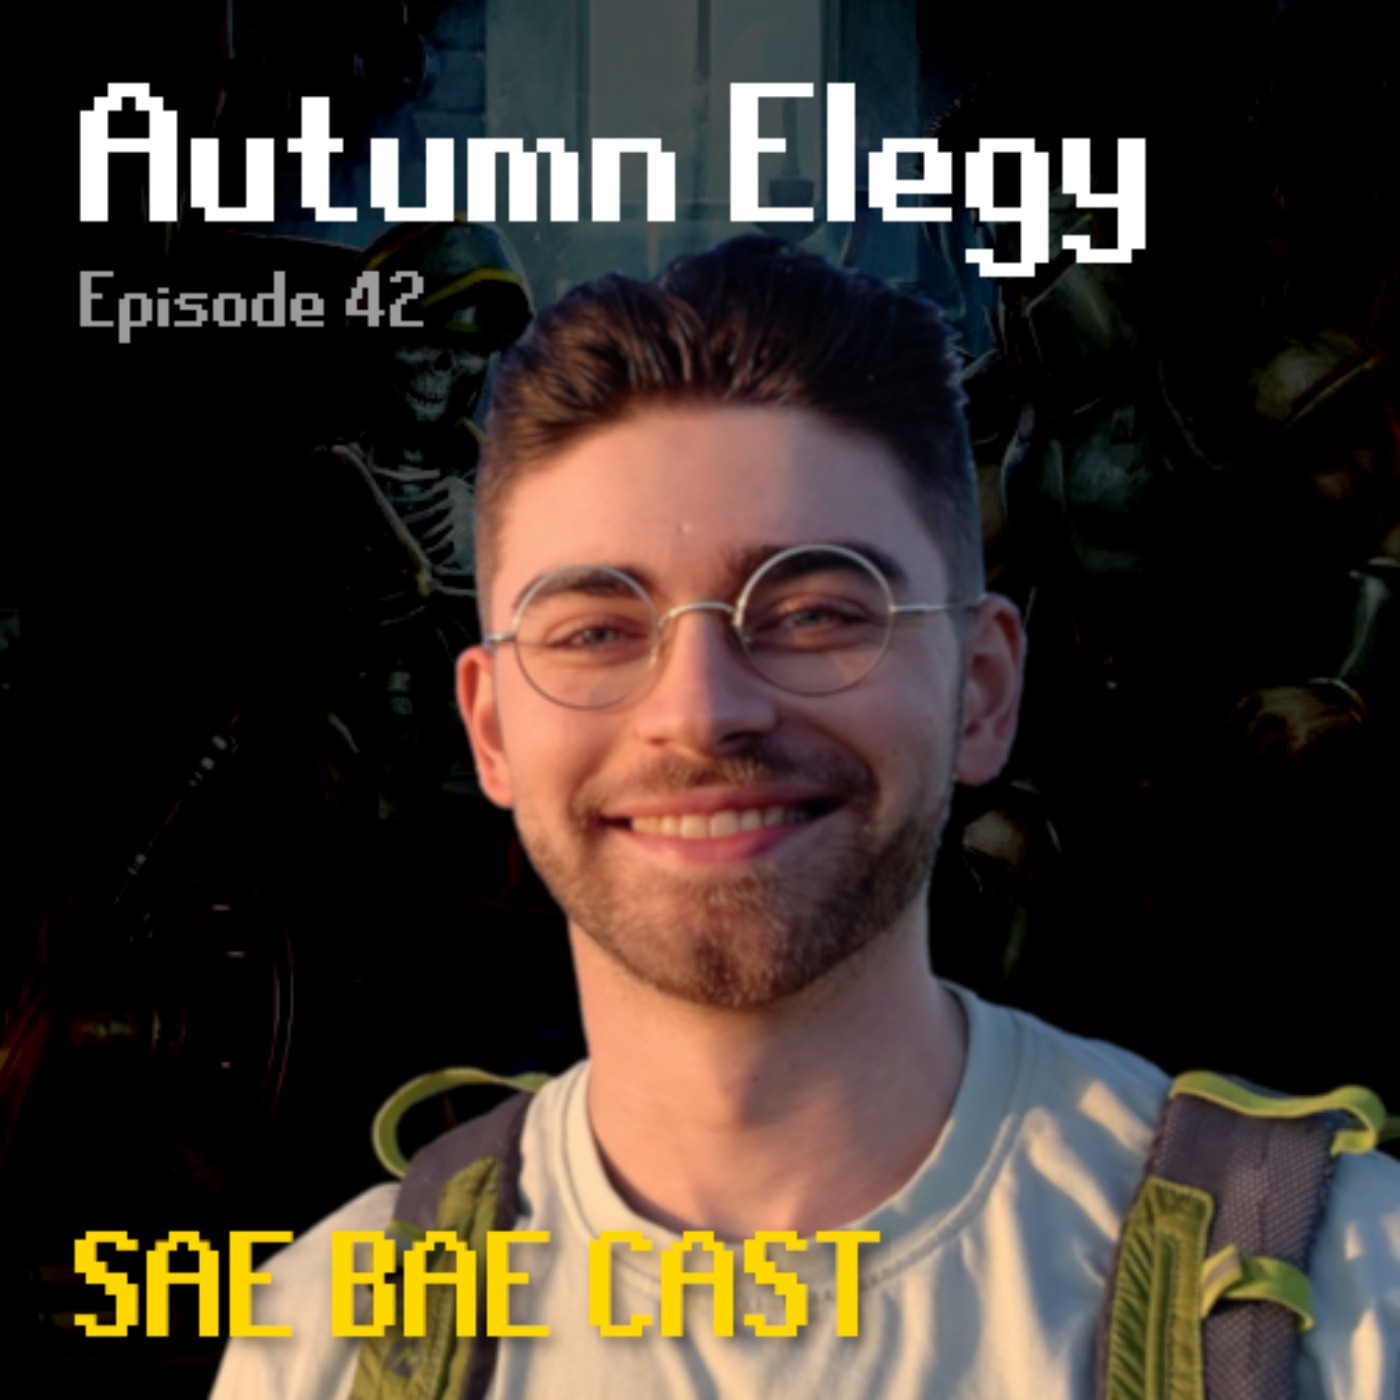 Sae Bae Cast 42 - Autumn Elegy